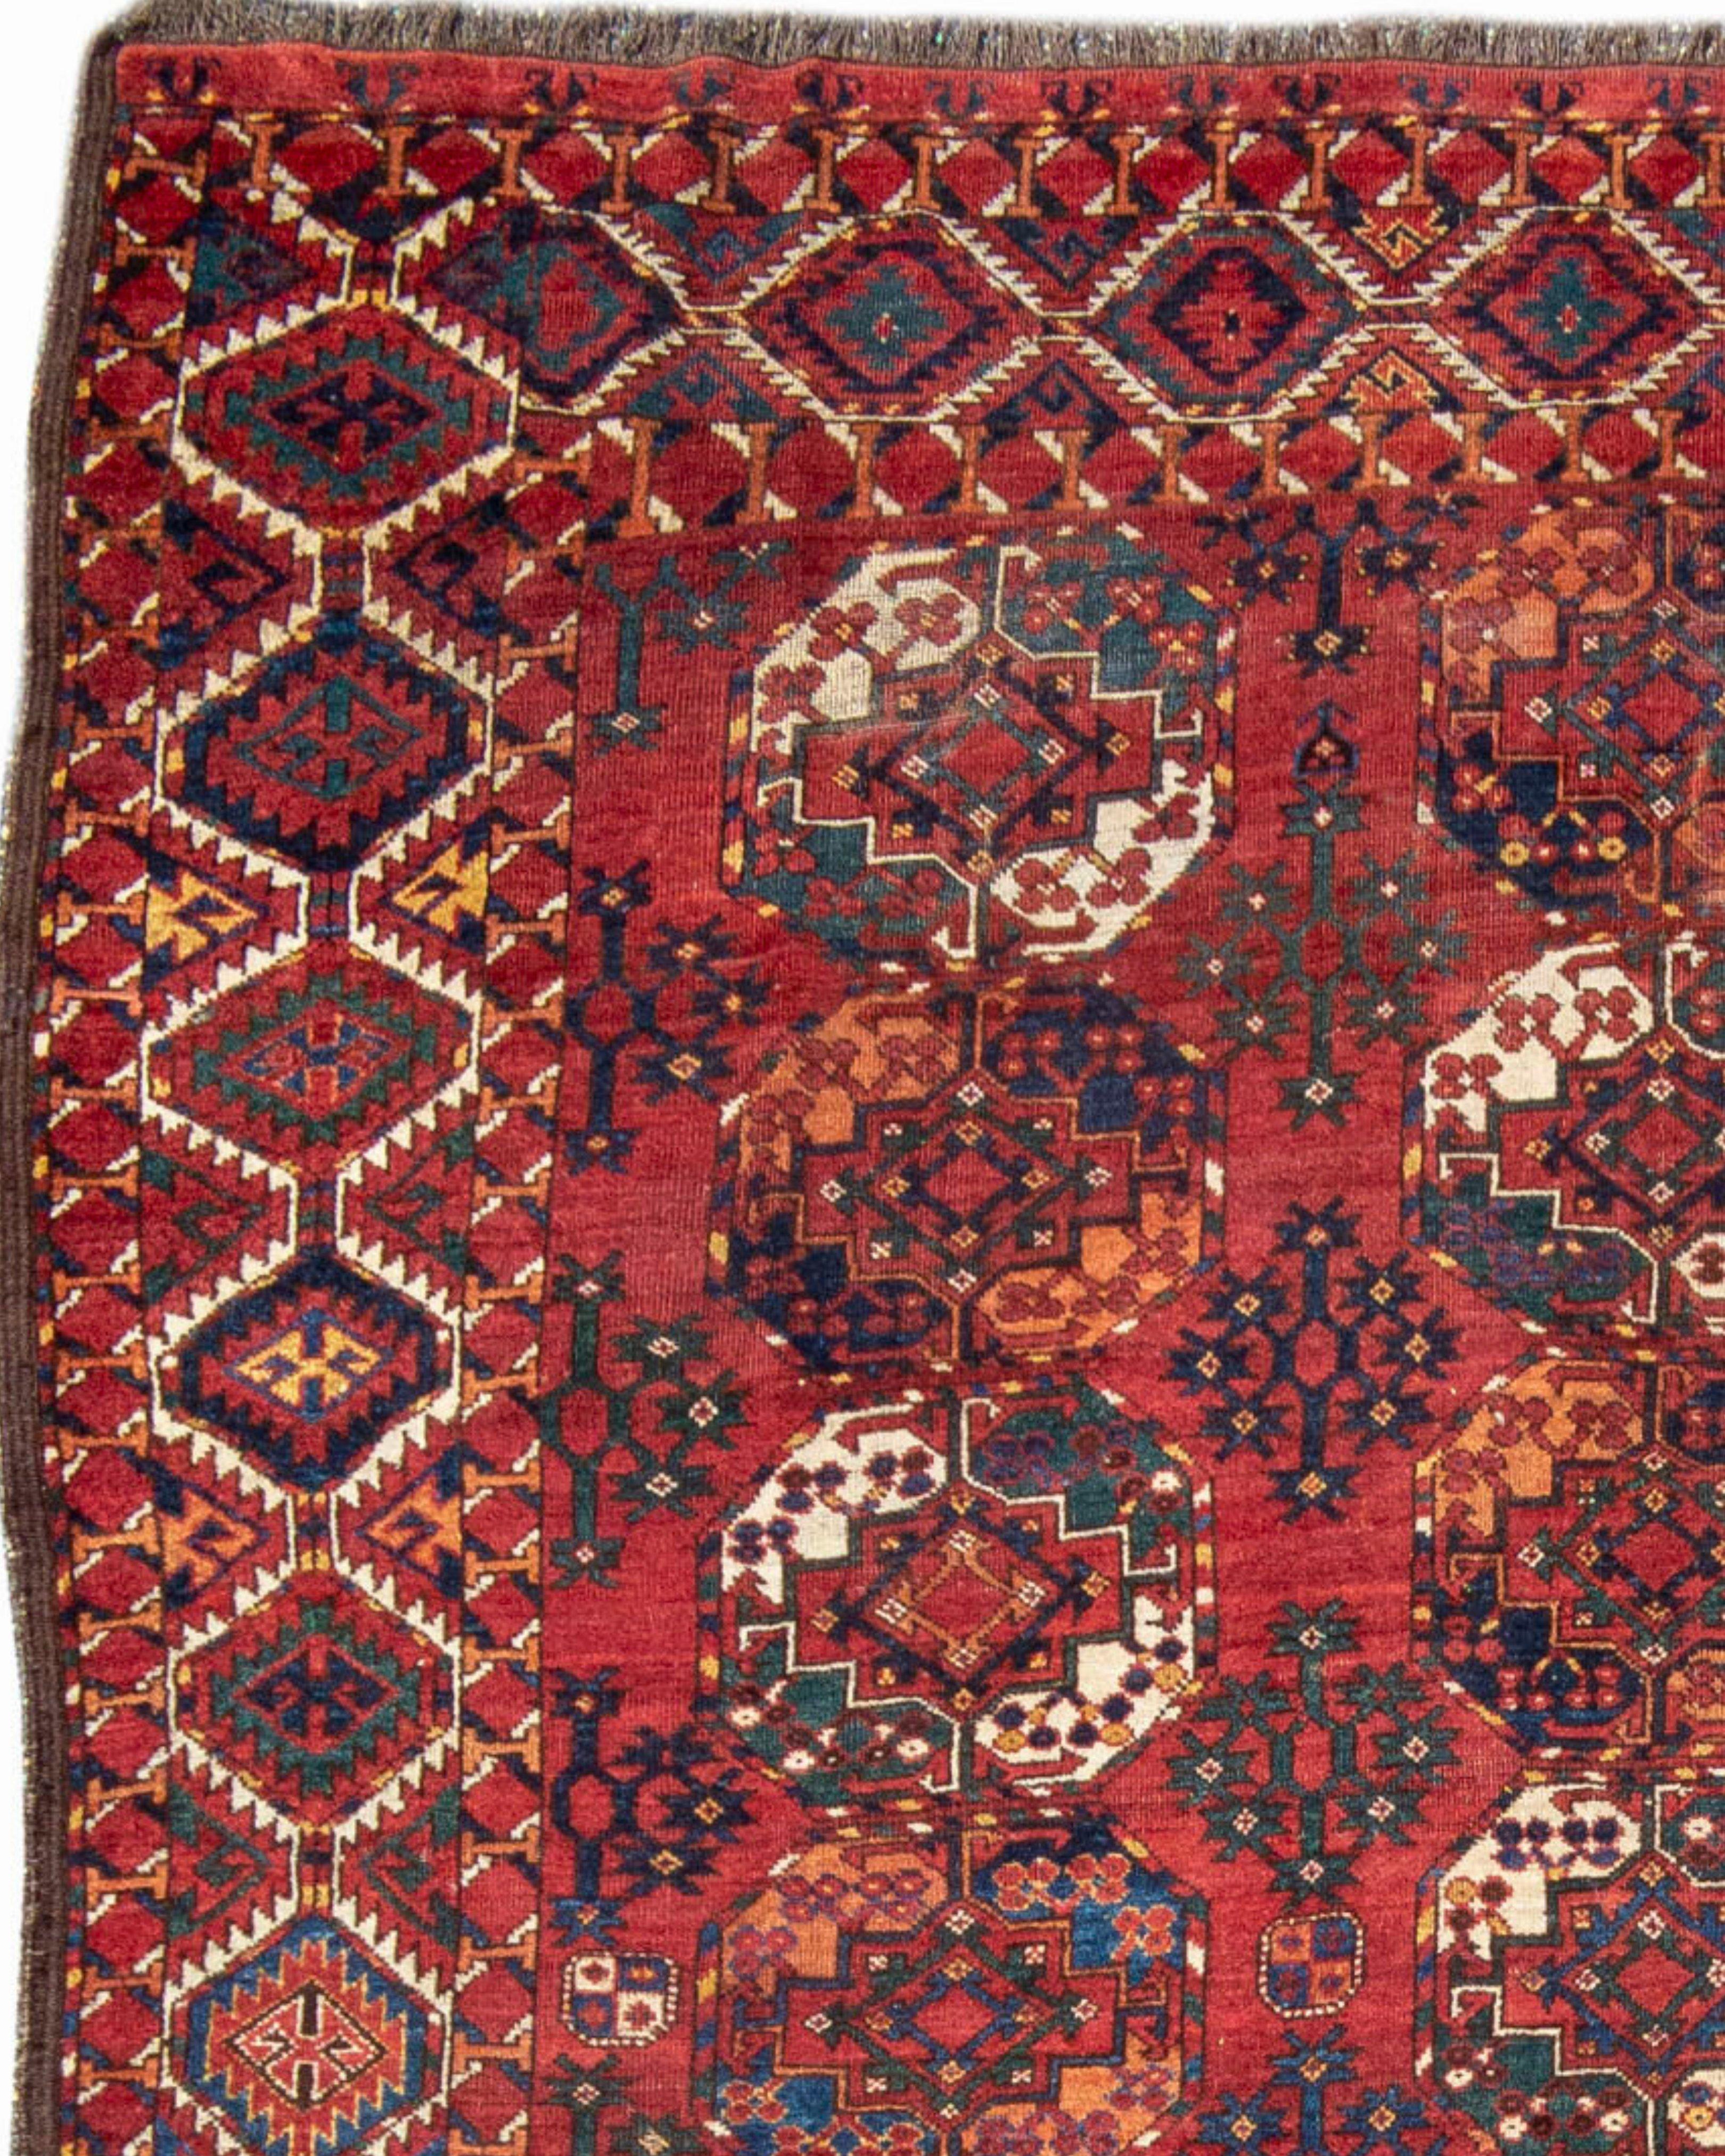 Hand-Woven Antique Afghan Ersari Main Carpet, 19th Century